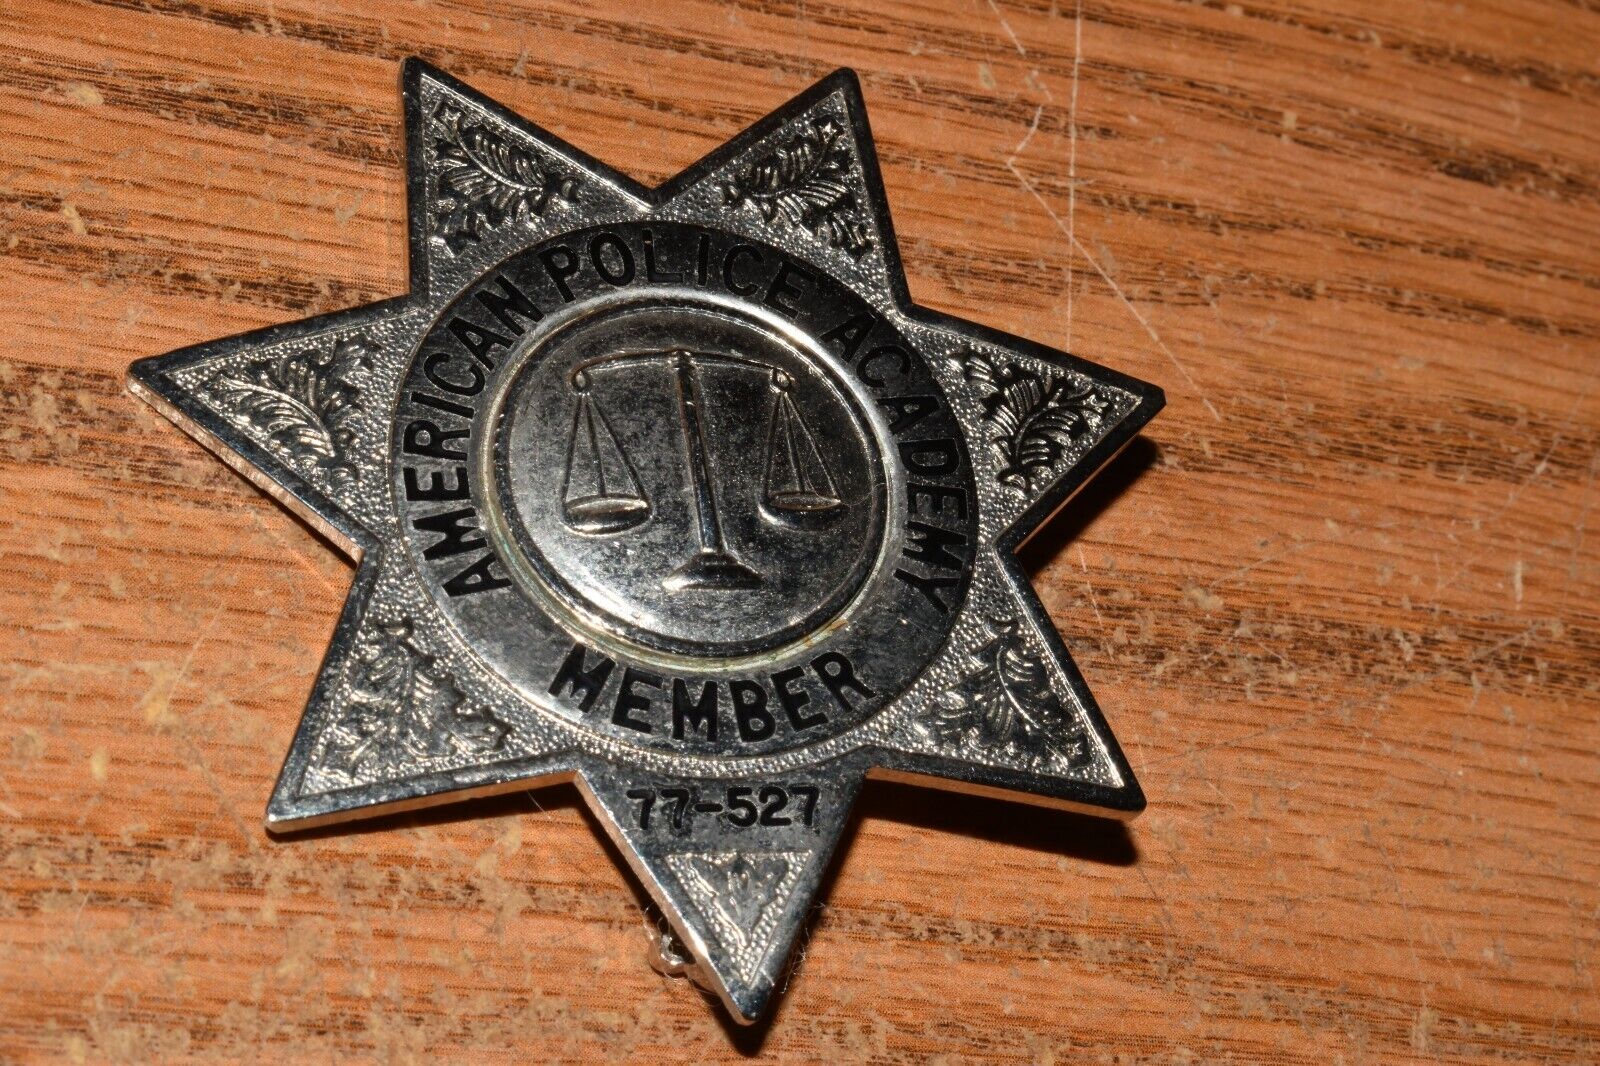 American Police Academy Member Badge # 77-527 Obsolete.